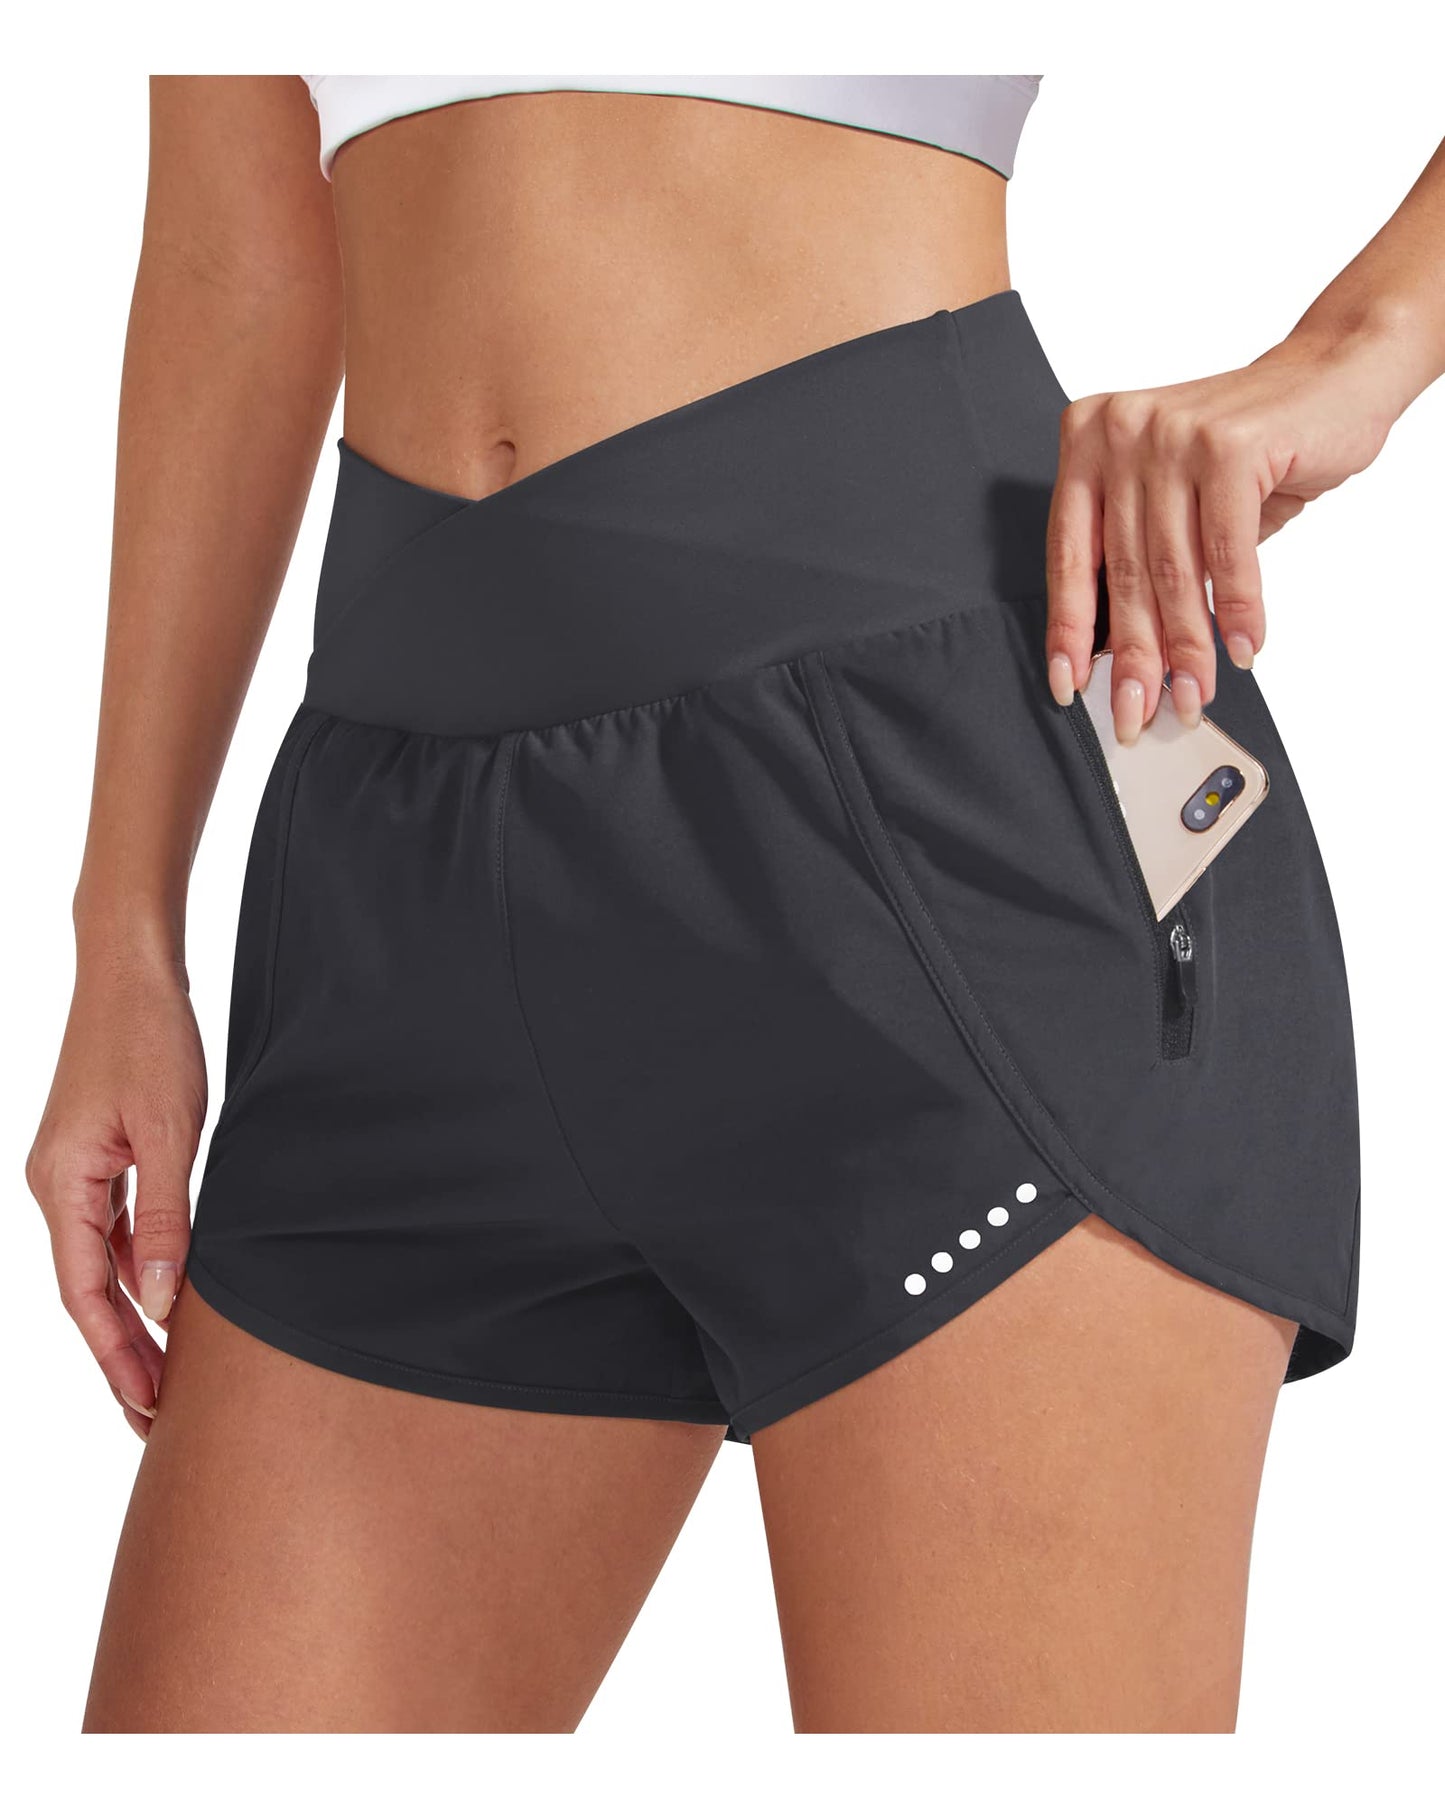 G4Free Womens Running Shorts with Zipper Pockets